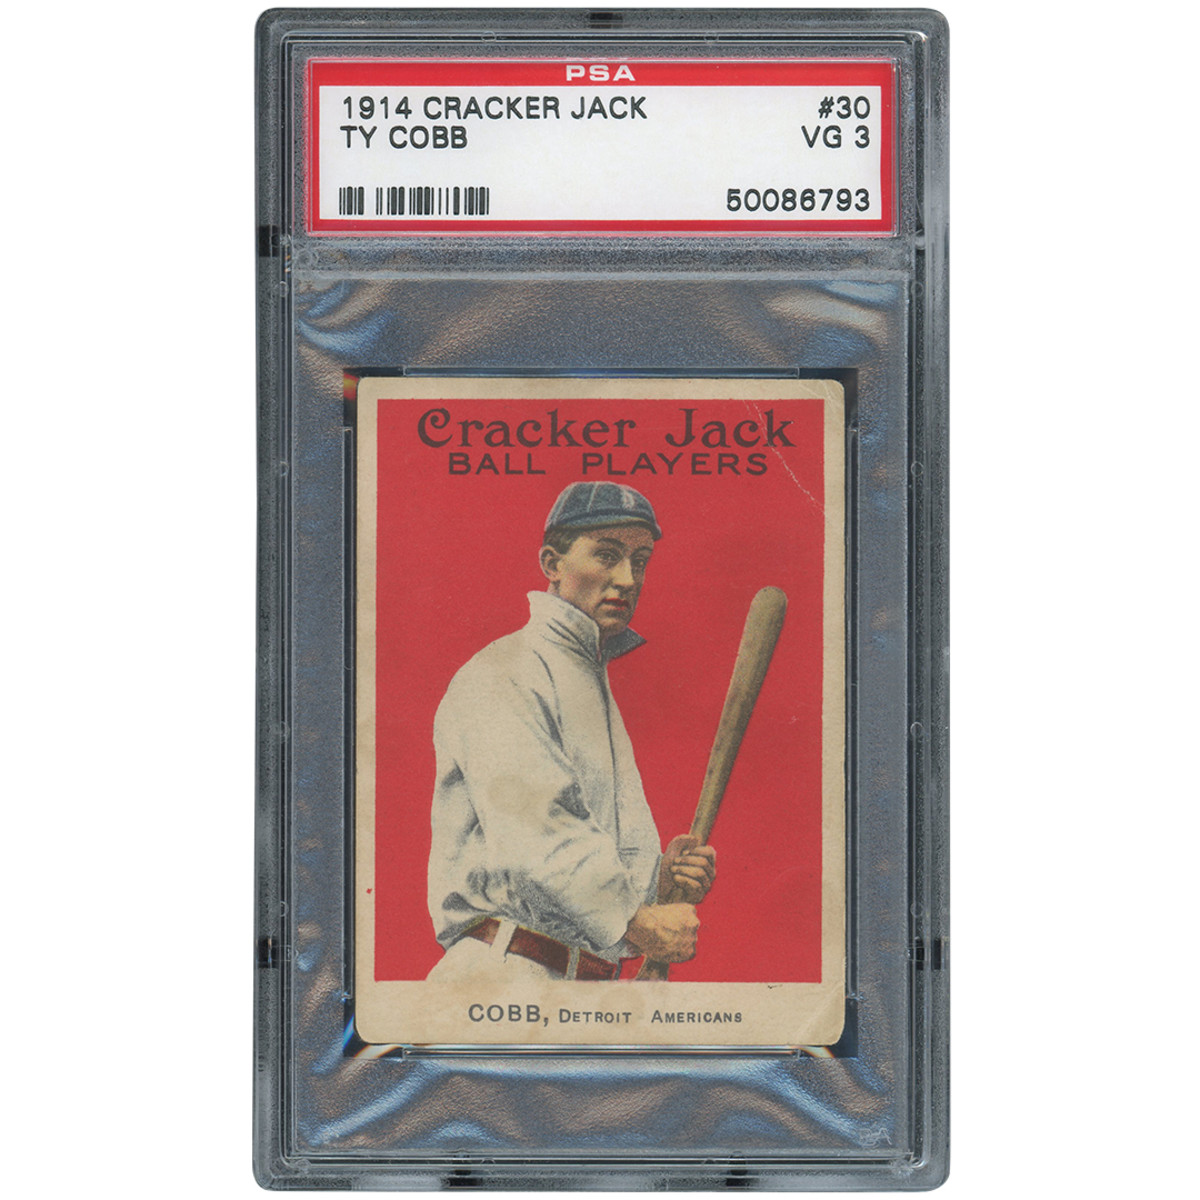 A 1914 Cracker Jack Ty Cobb card.